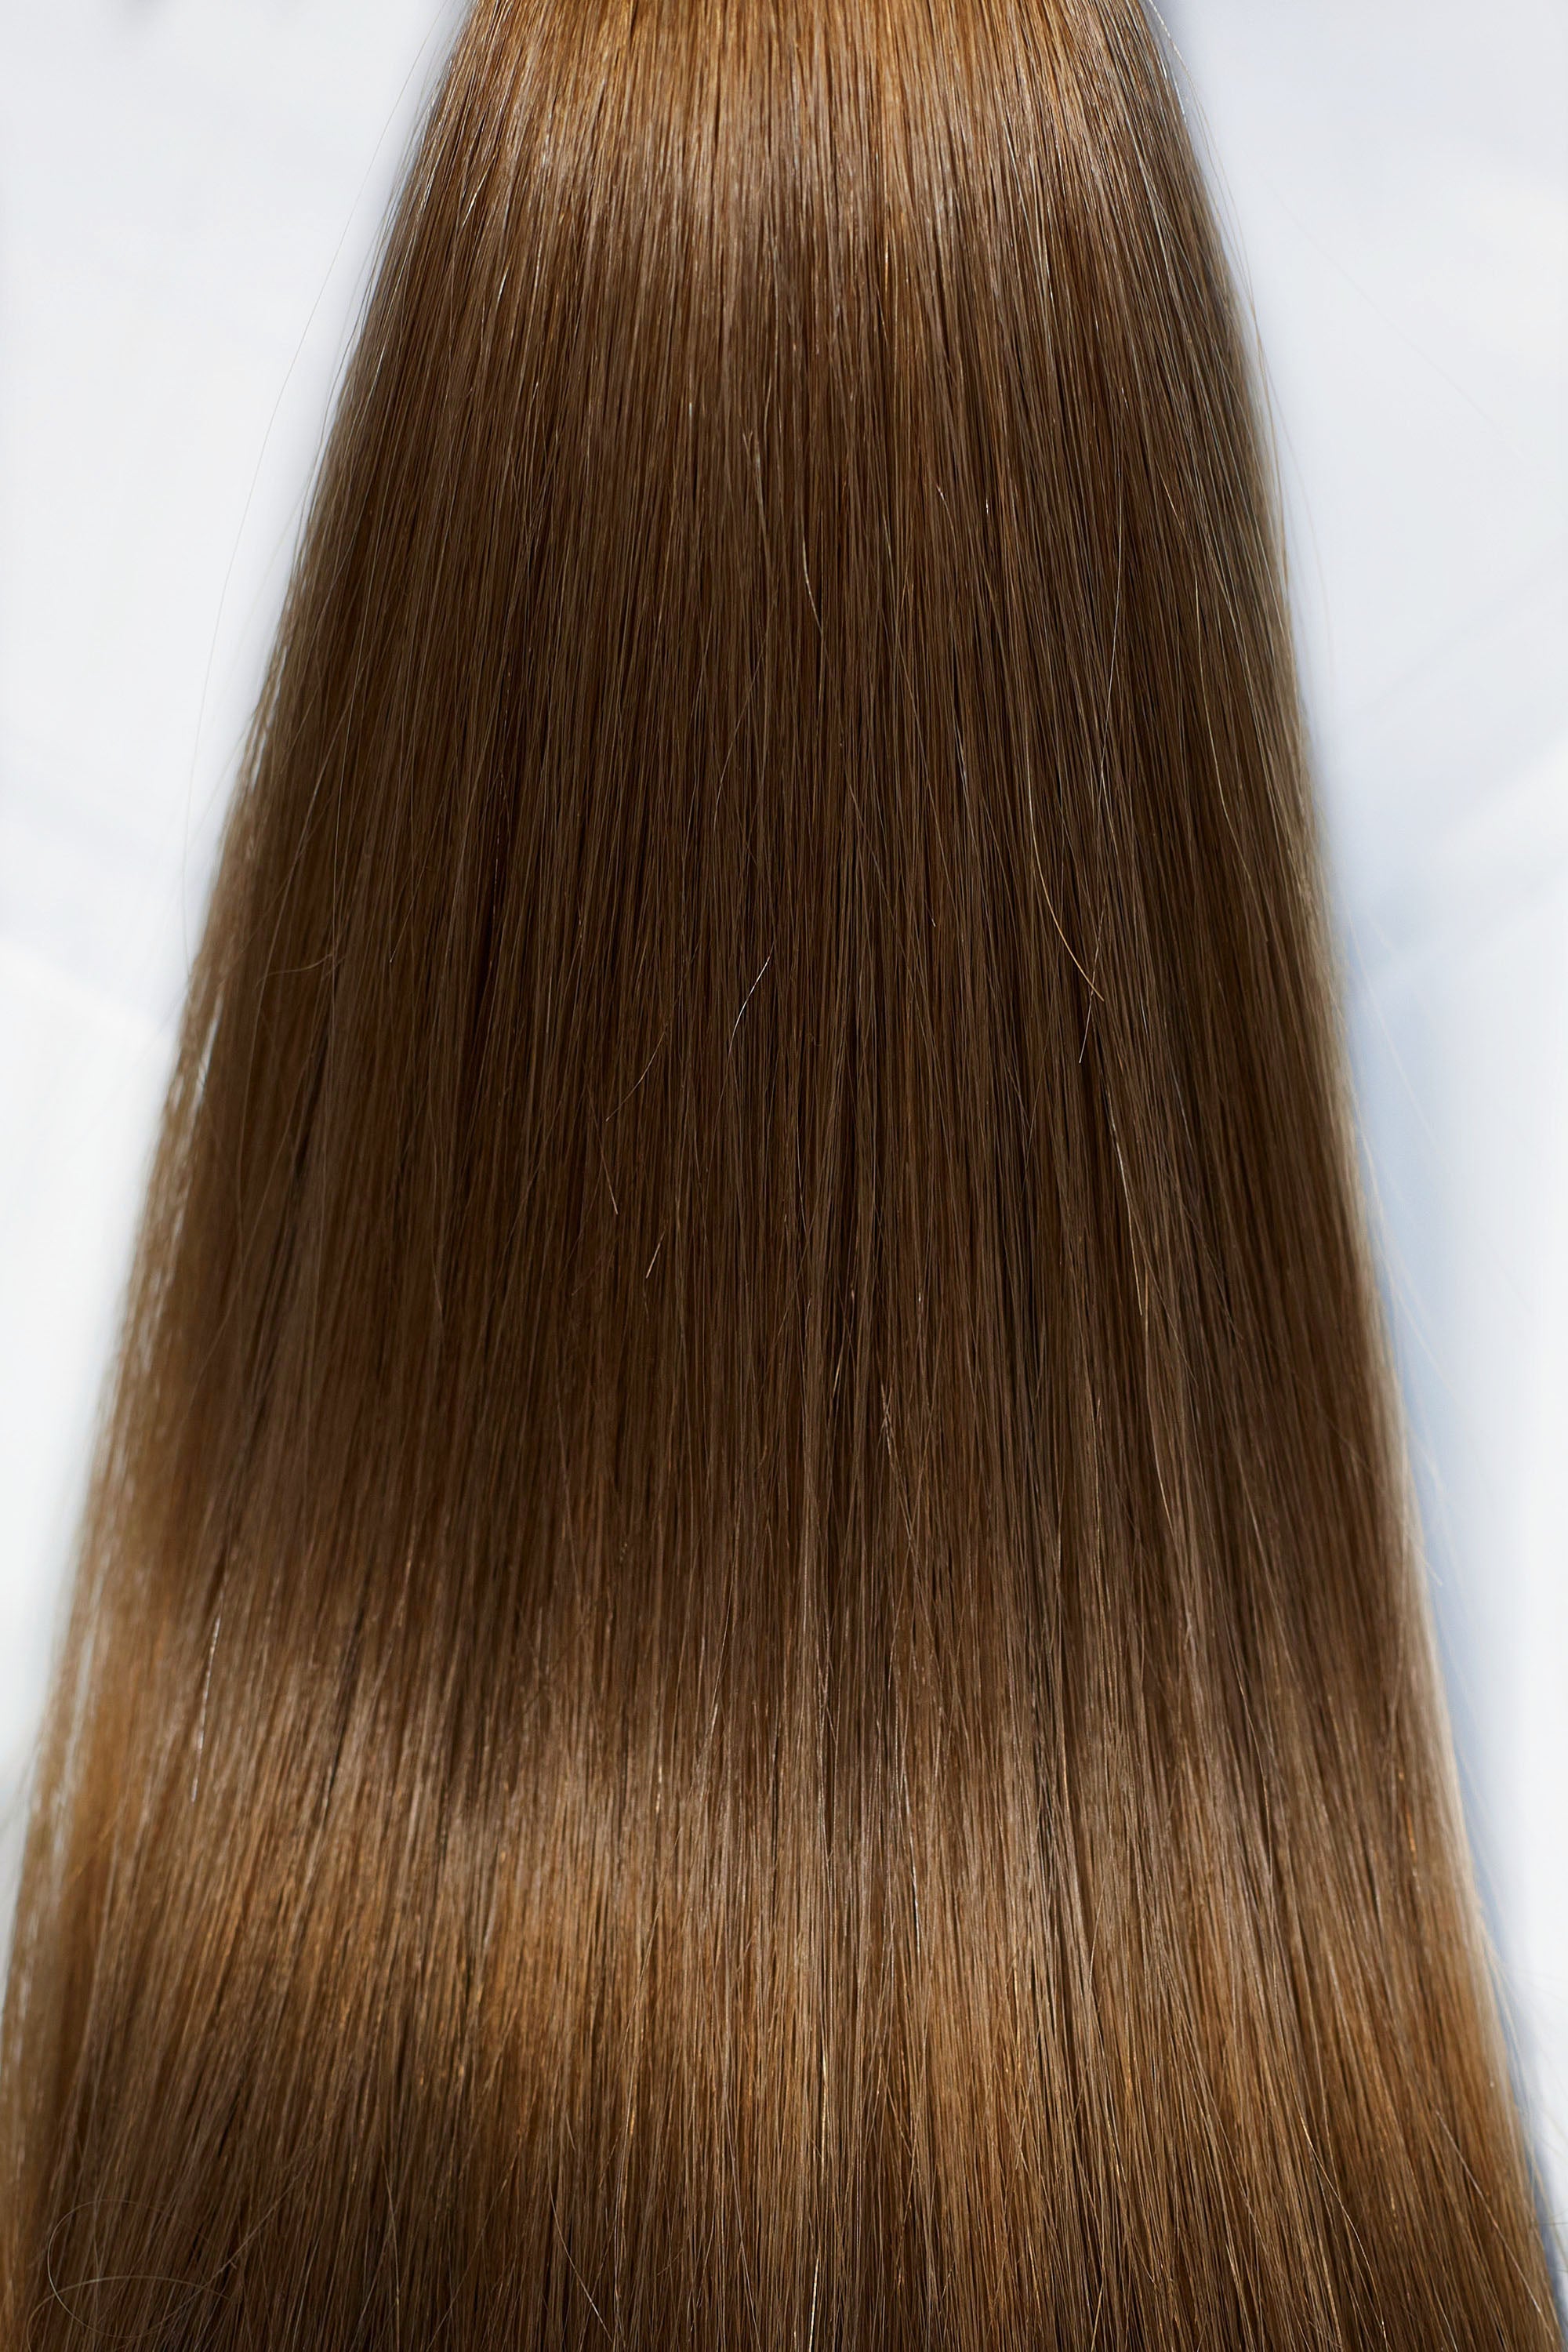 Behair professional Keratin Tip "Premium" 22" (55cm) Natural Straight Chestnut #6 - 25g (Micro - 0.5g each pcs) hair extensions